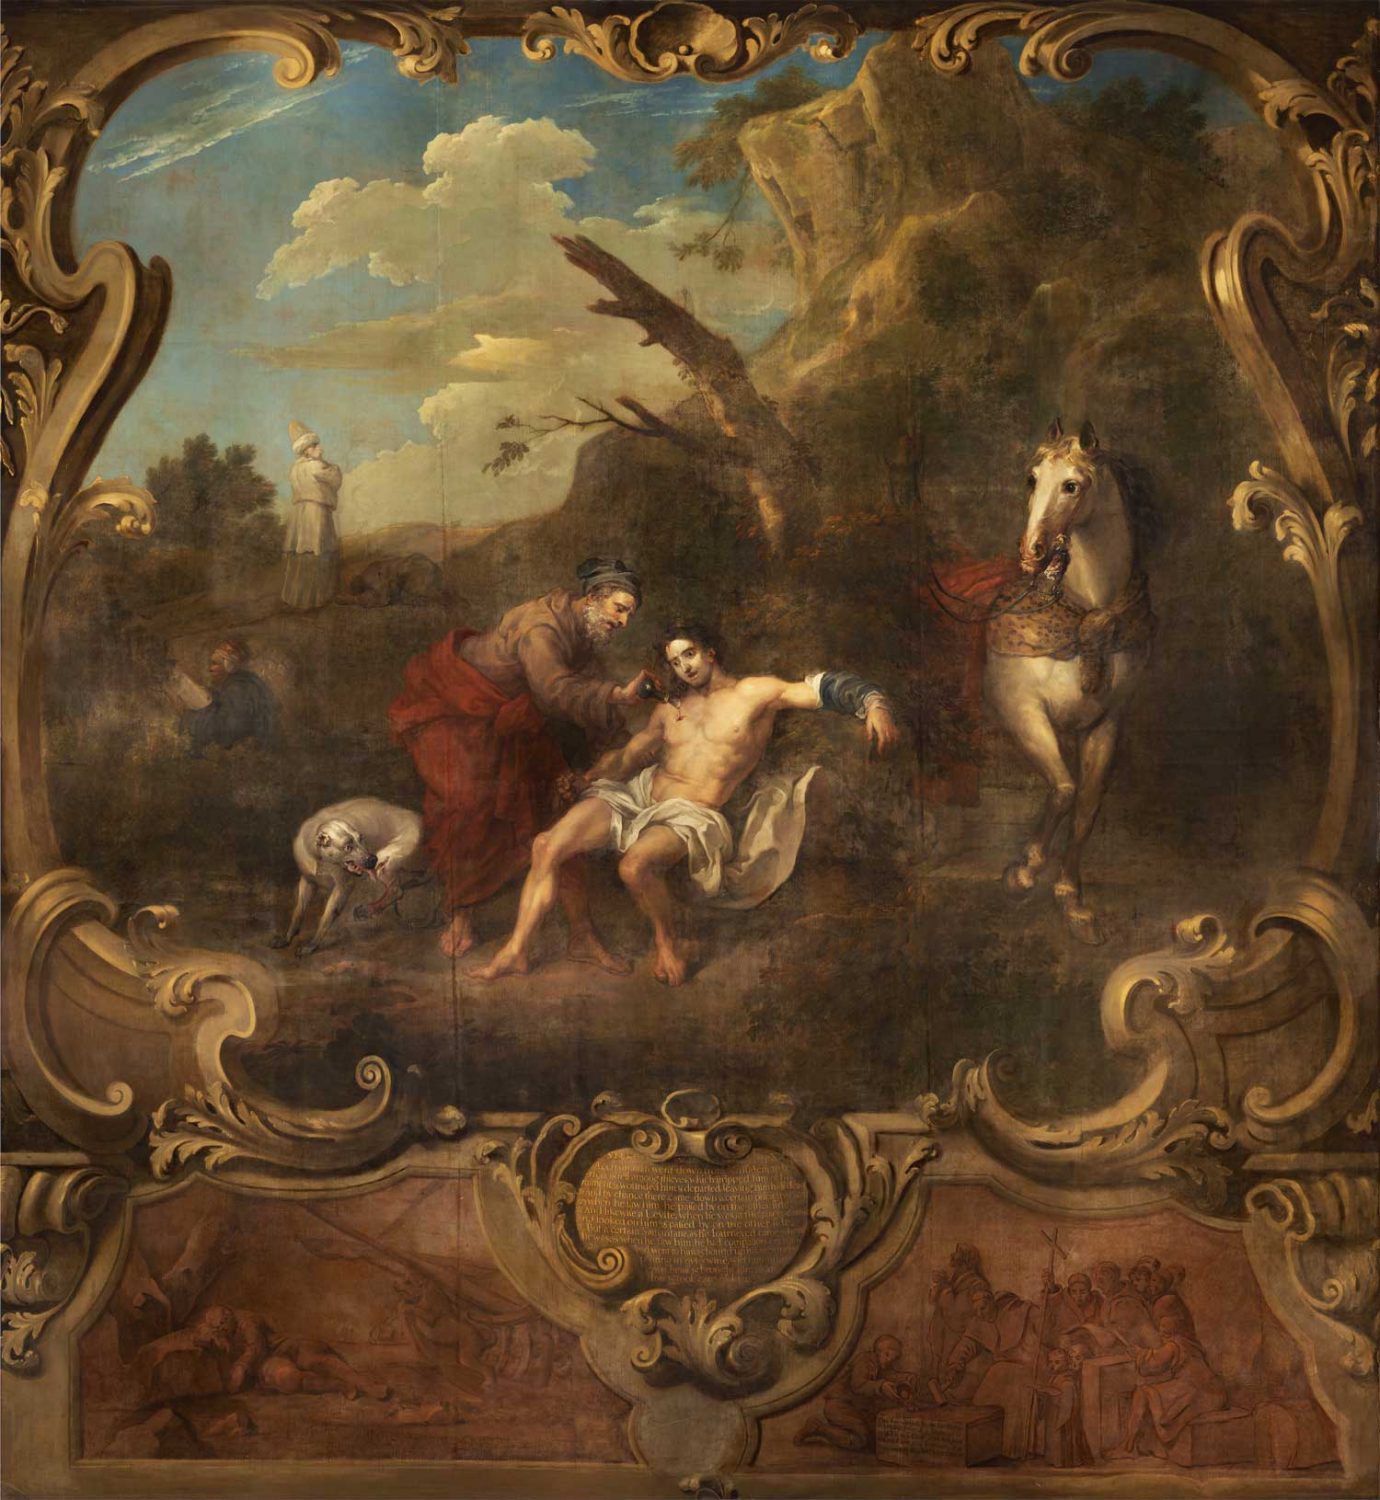 William Hogarth (1697-1764) The Good Samaritan, 1737. Oil on canvas.